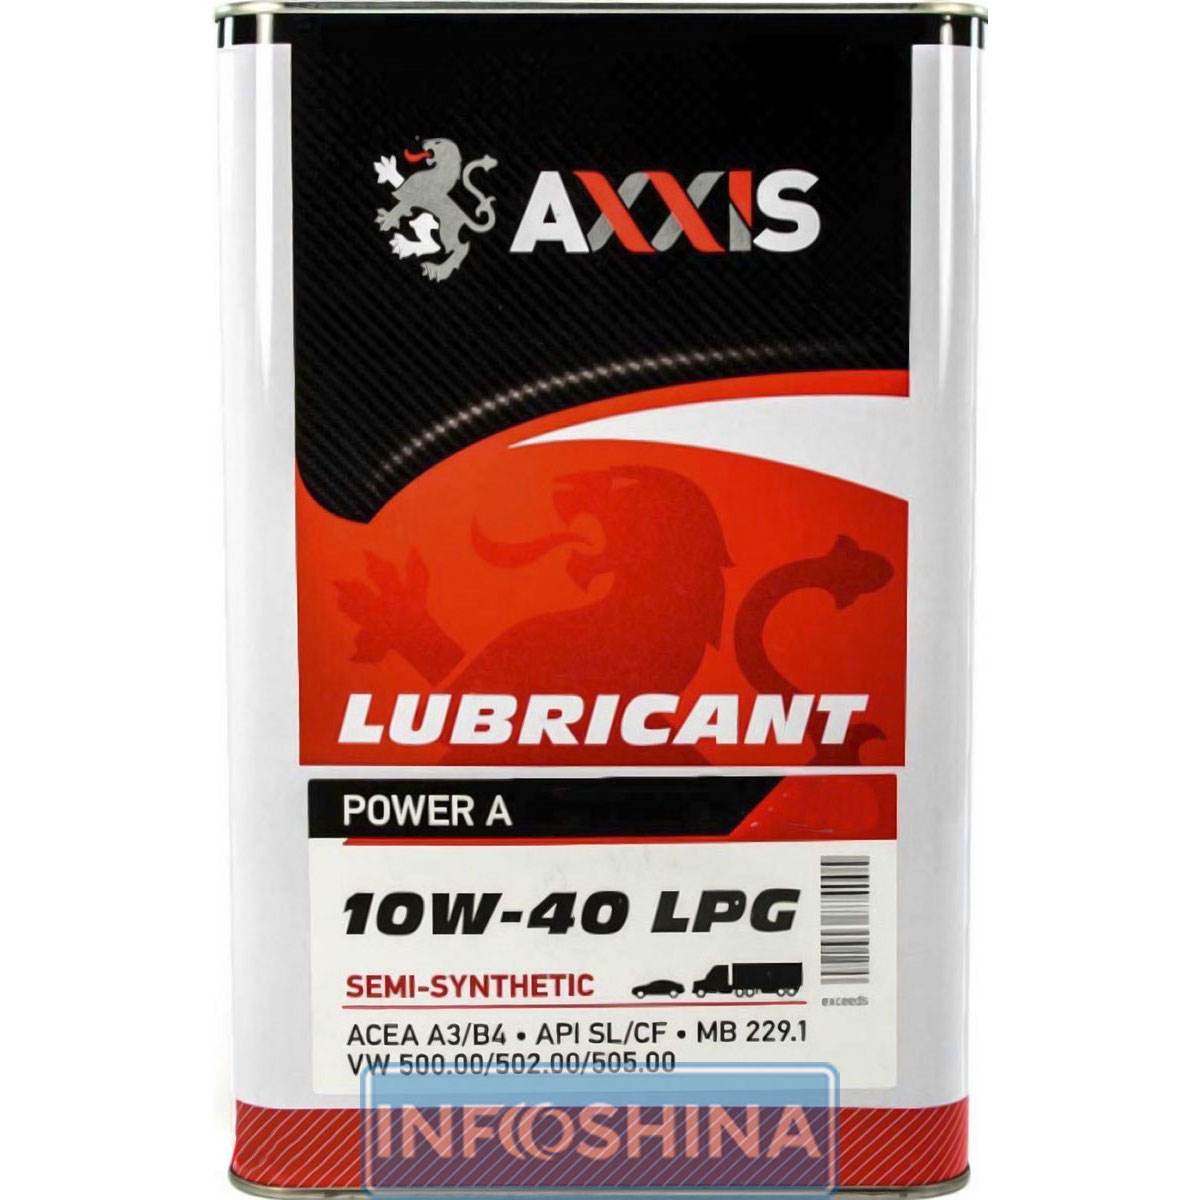 AXXIS 10W-40 LPG Power A